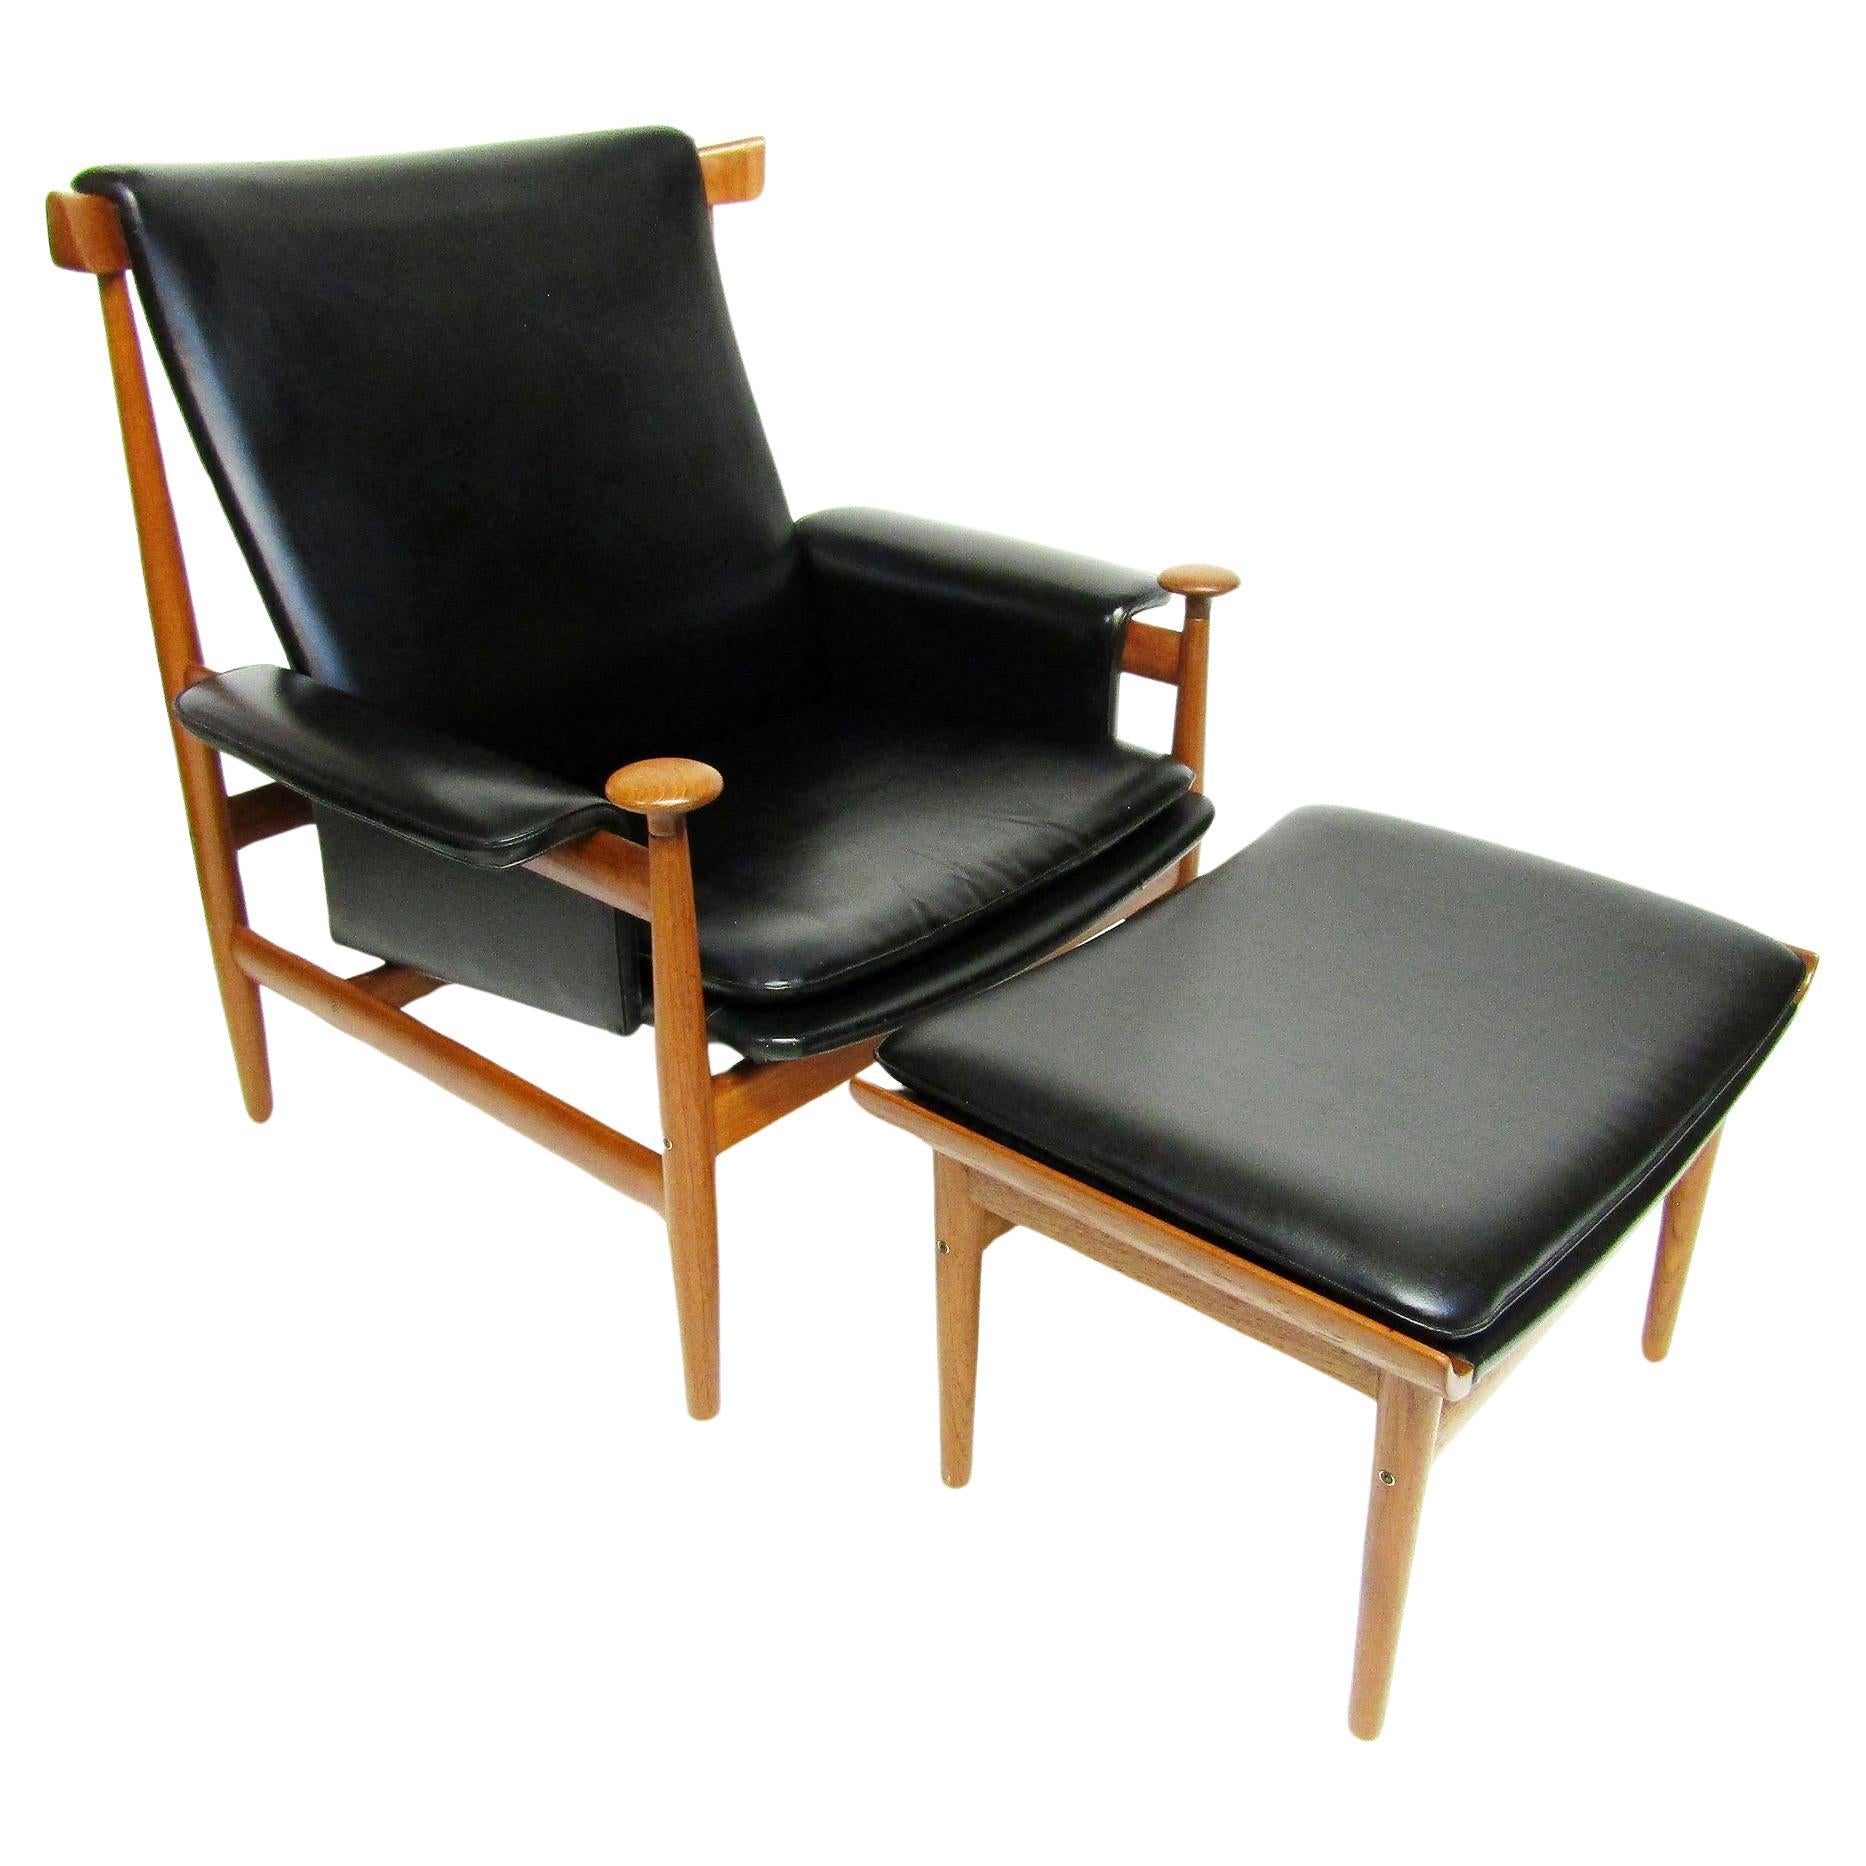 1960s Danish Bwana Chair & Ottoman By Finn Juhl In Teak & Skai